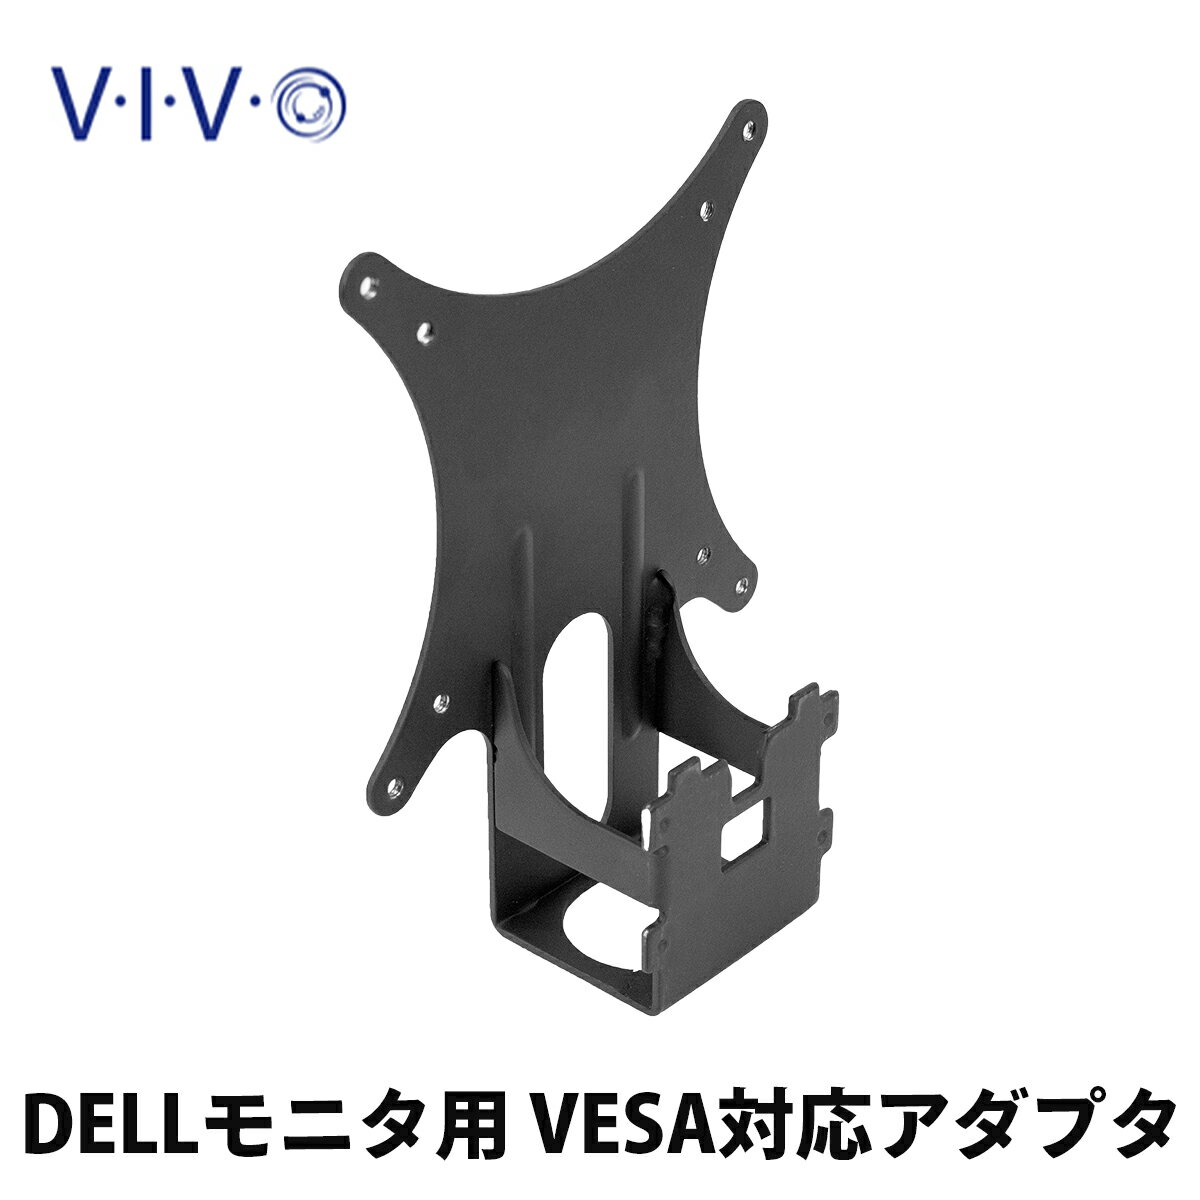 VIVO DELL モニター用 VESAアダプタ MOUNT-DLSSE2